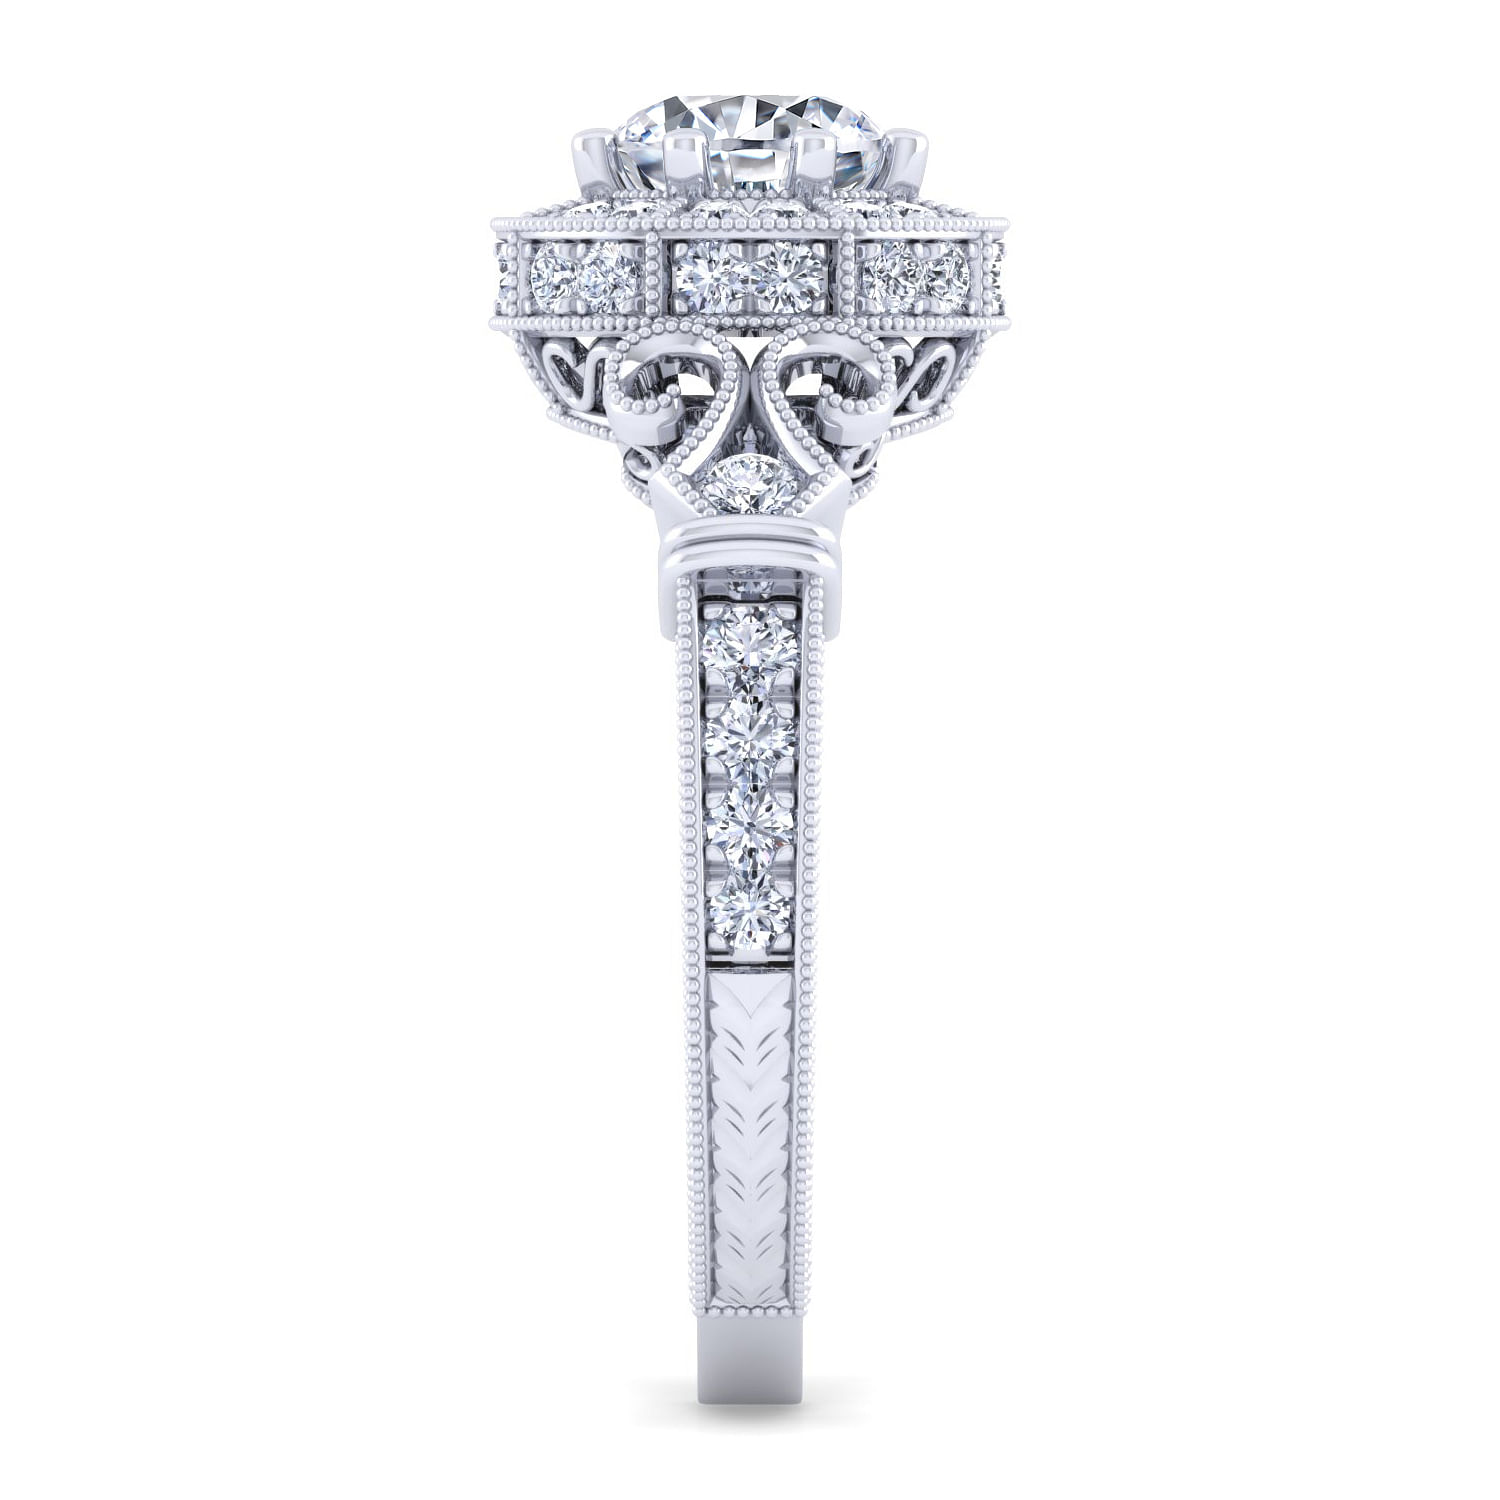 Vintage Inspired 18K White Gold Round Halo Diamond Engagement Ring